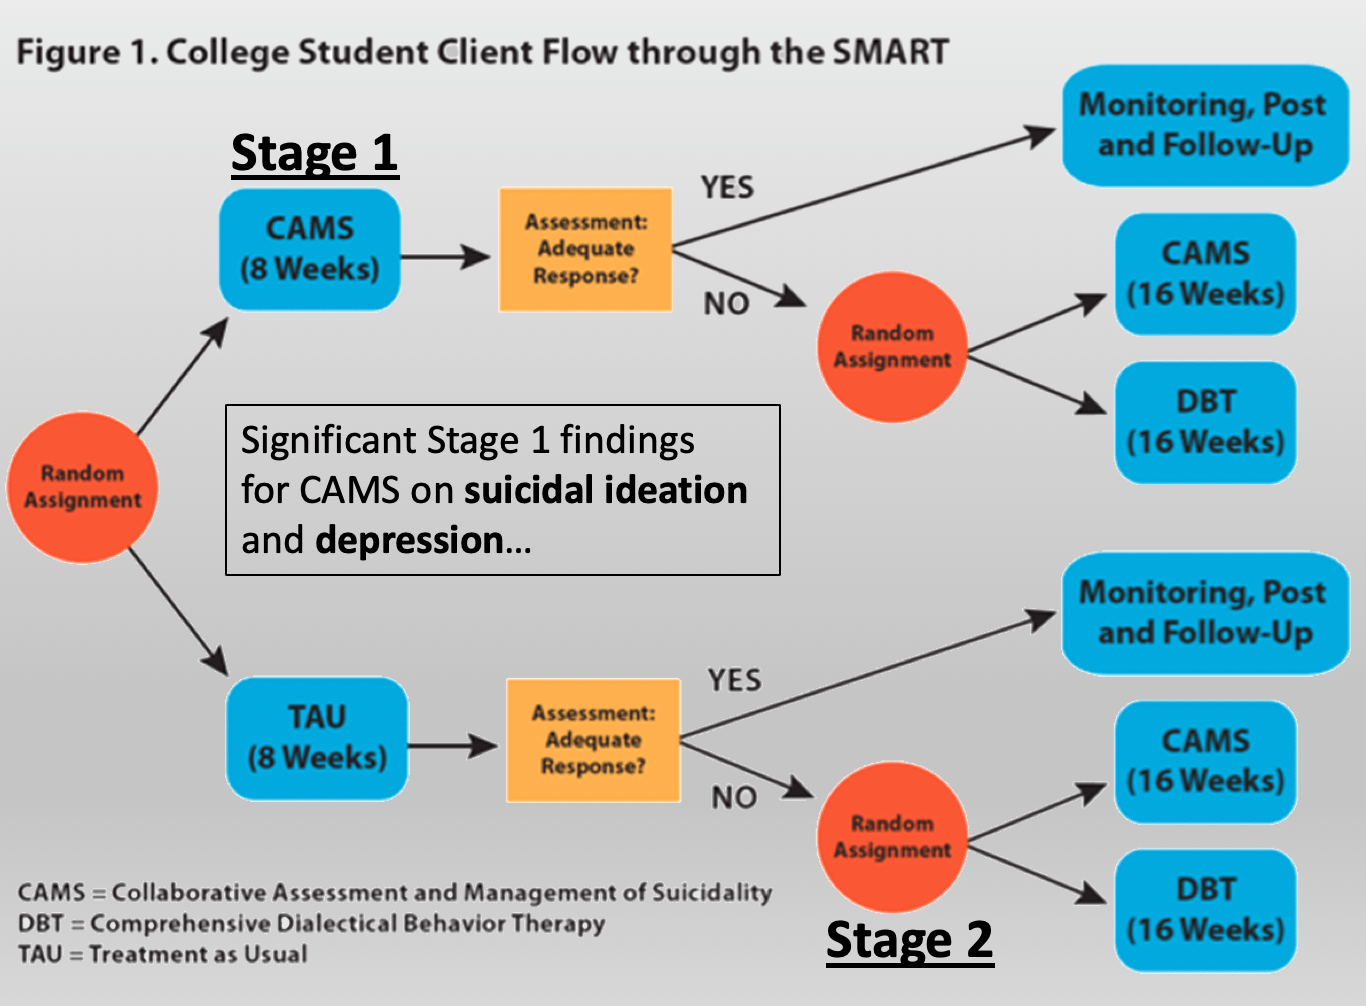 College Student Client Flow Through SMART; Full description appears after image.